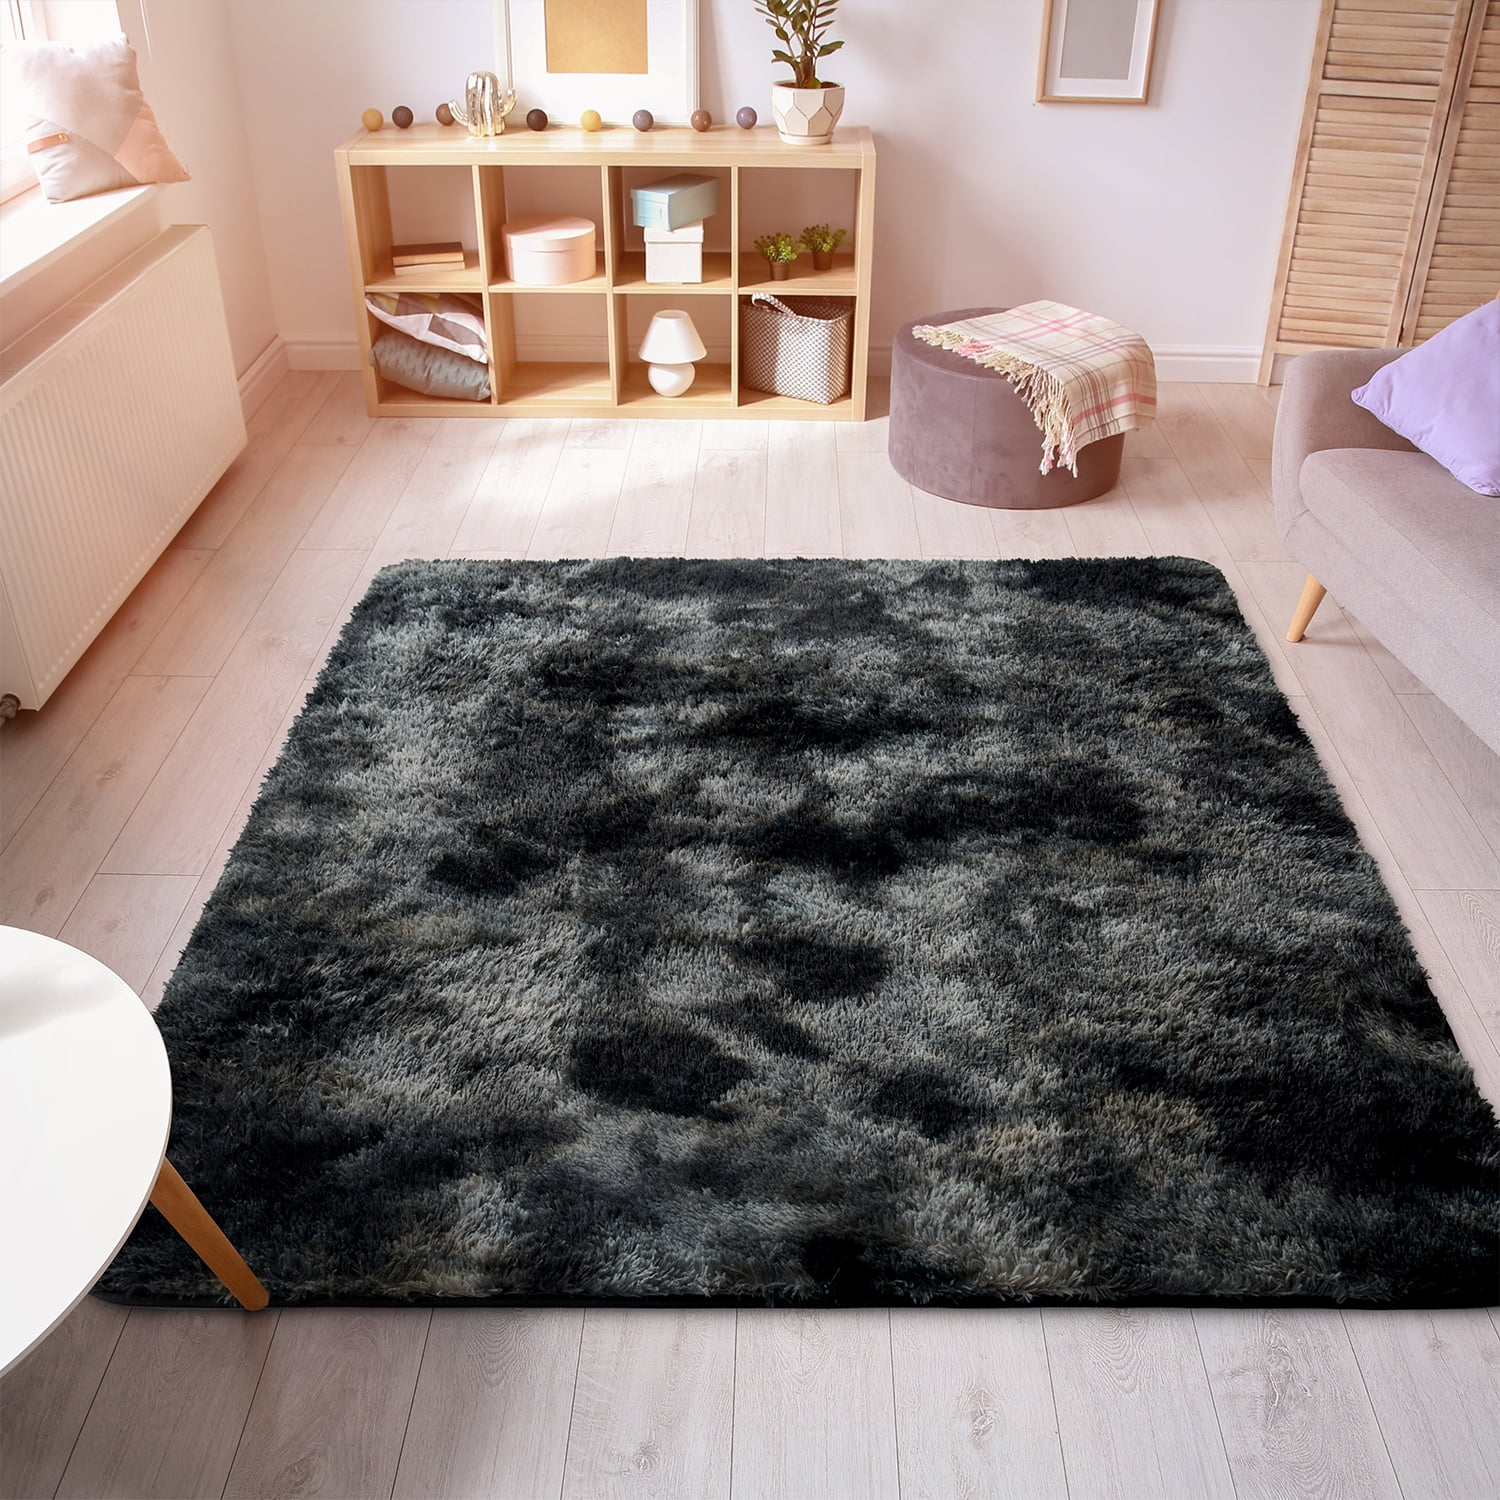 Contemporary Rug Grey Black Blue Star Mats New Carpet Living Room Small Large XL 